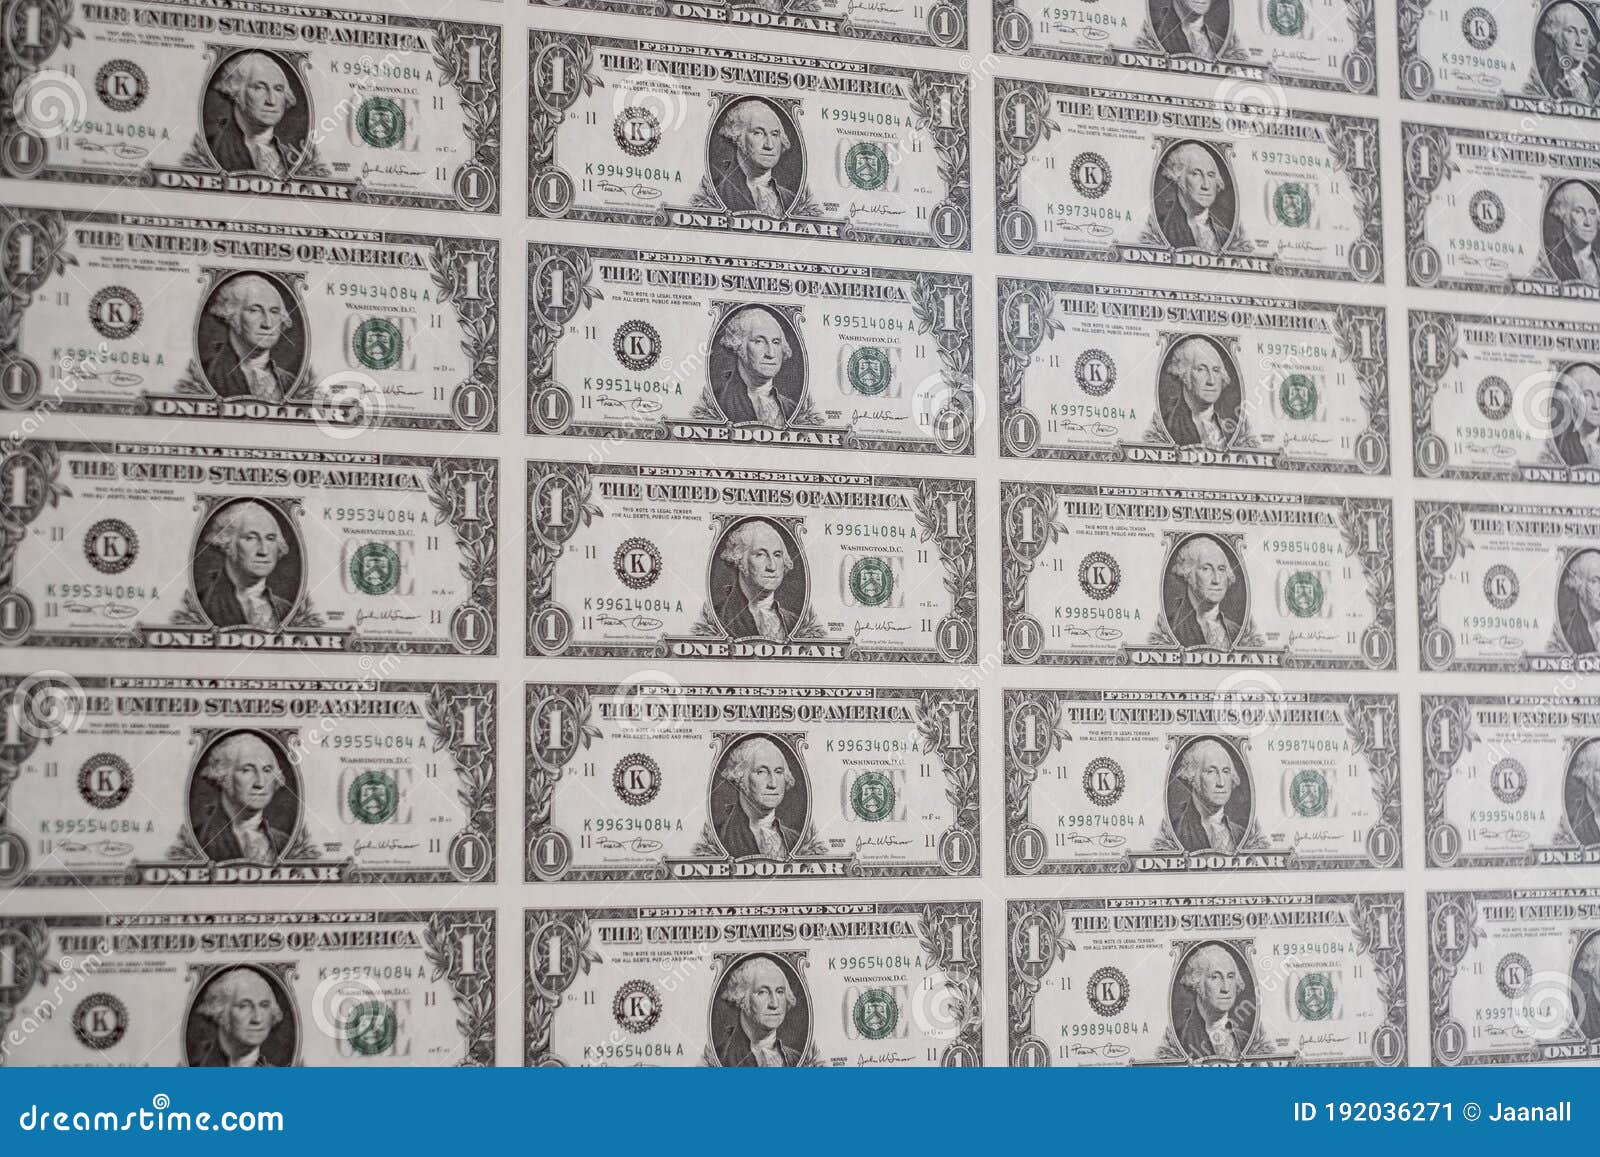 Printing American dollars. Uncut US dollar sheets from printer. Printing money